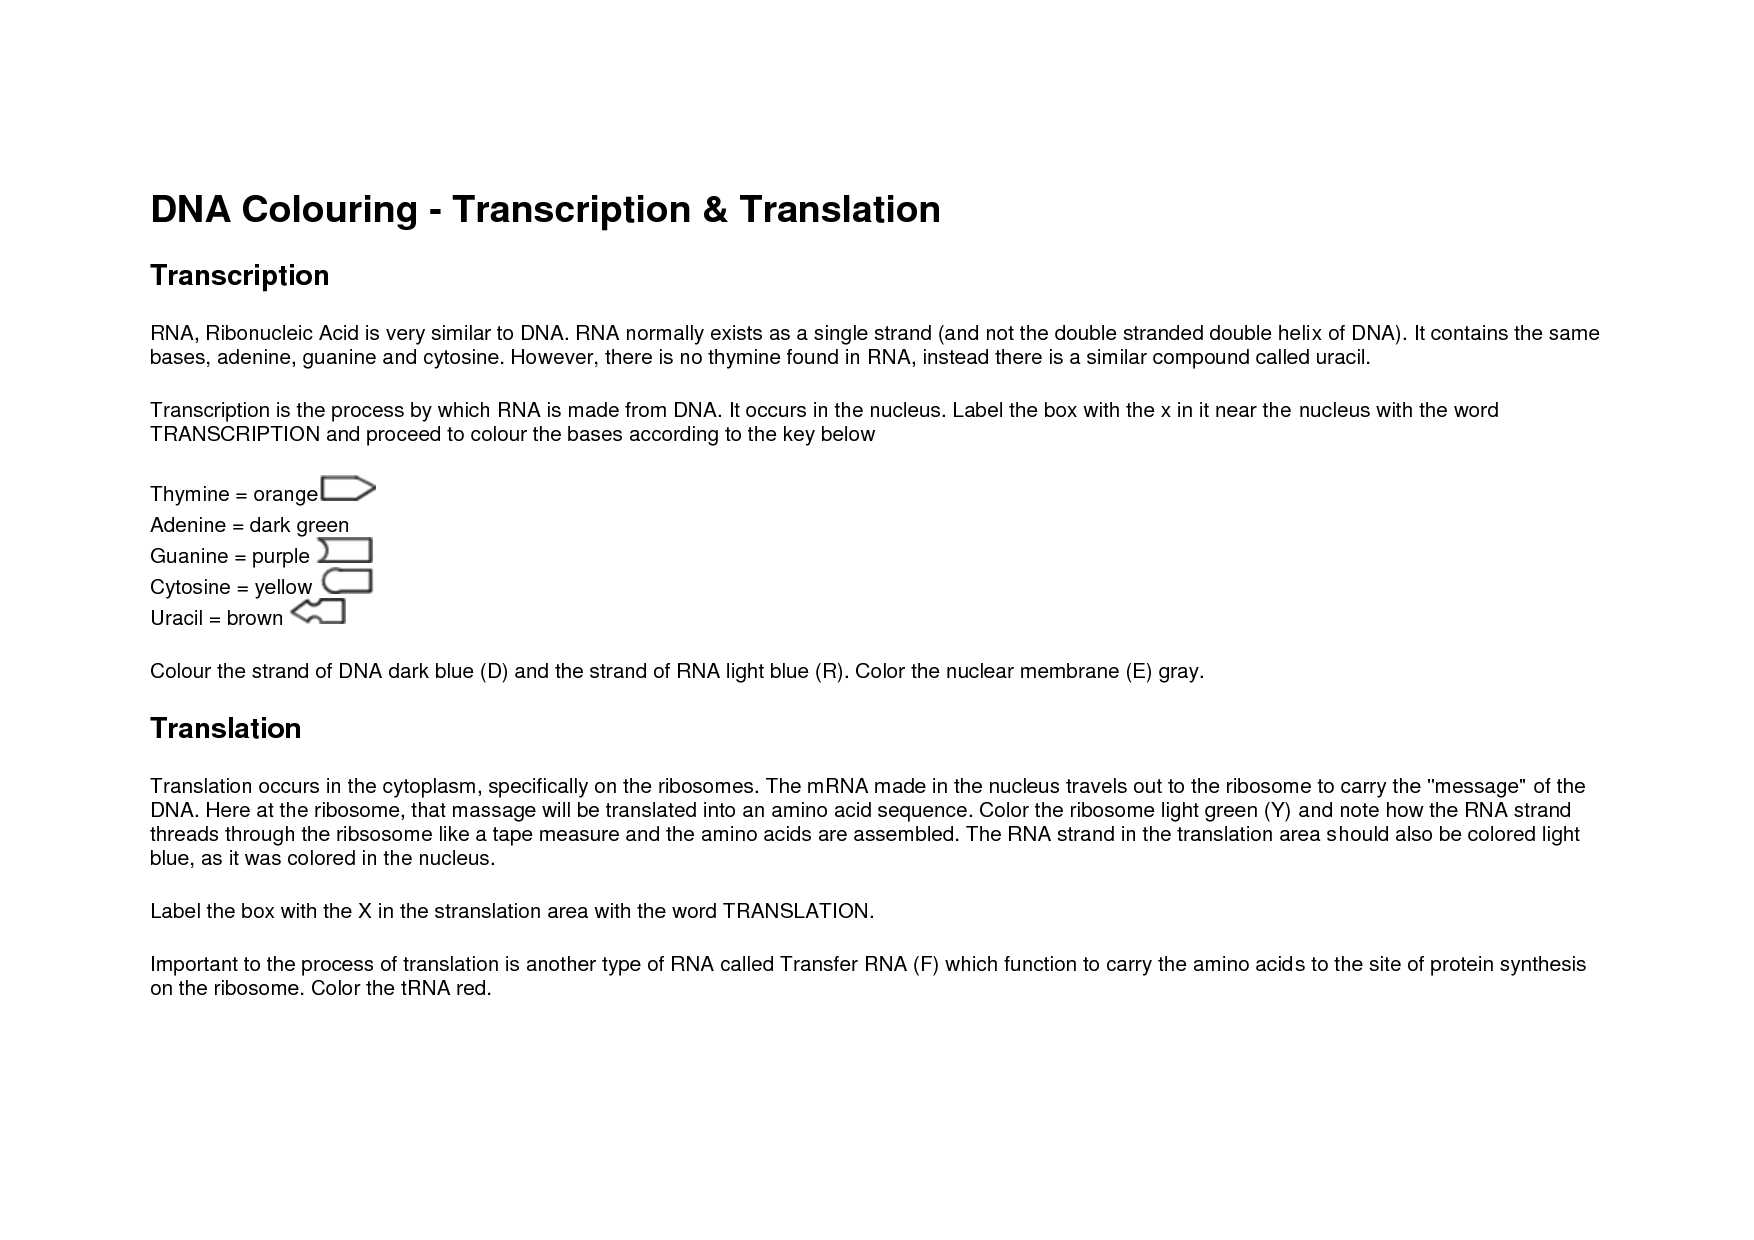 Transcription Worksheet Answer Key Also Dna Coloring Transcription and Translation Answer Key